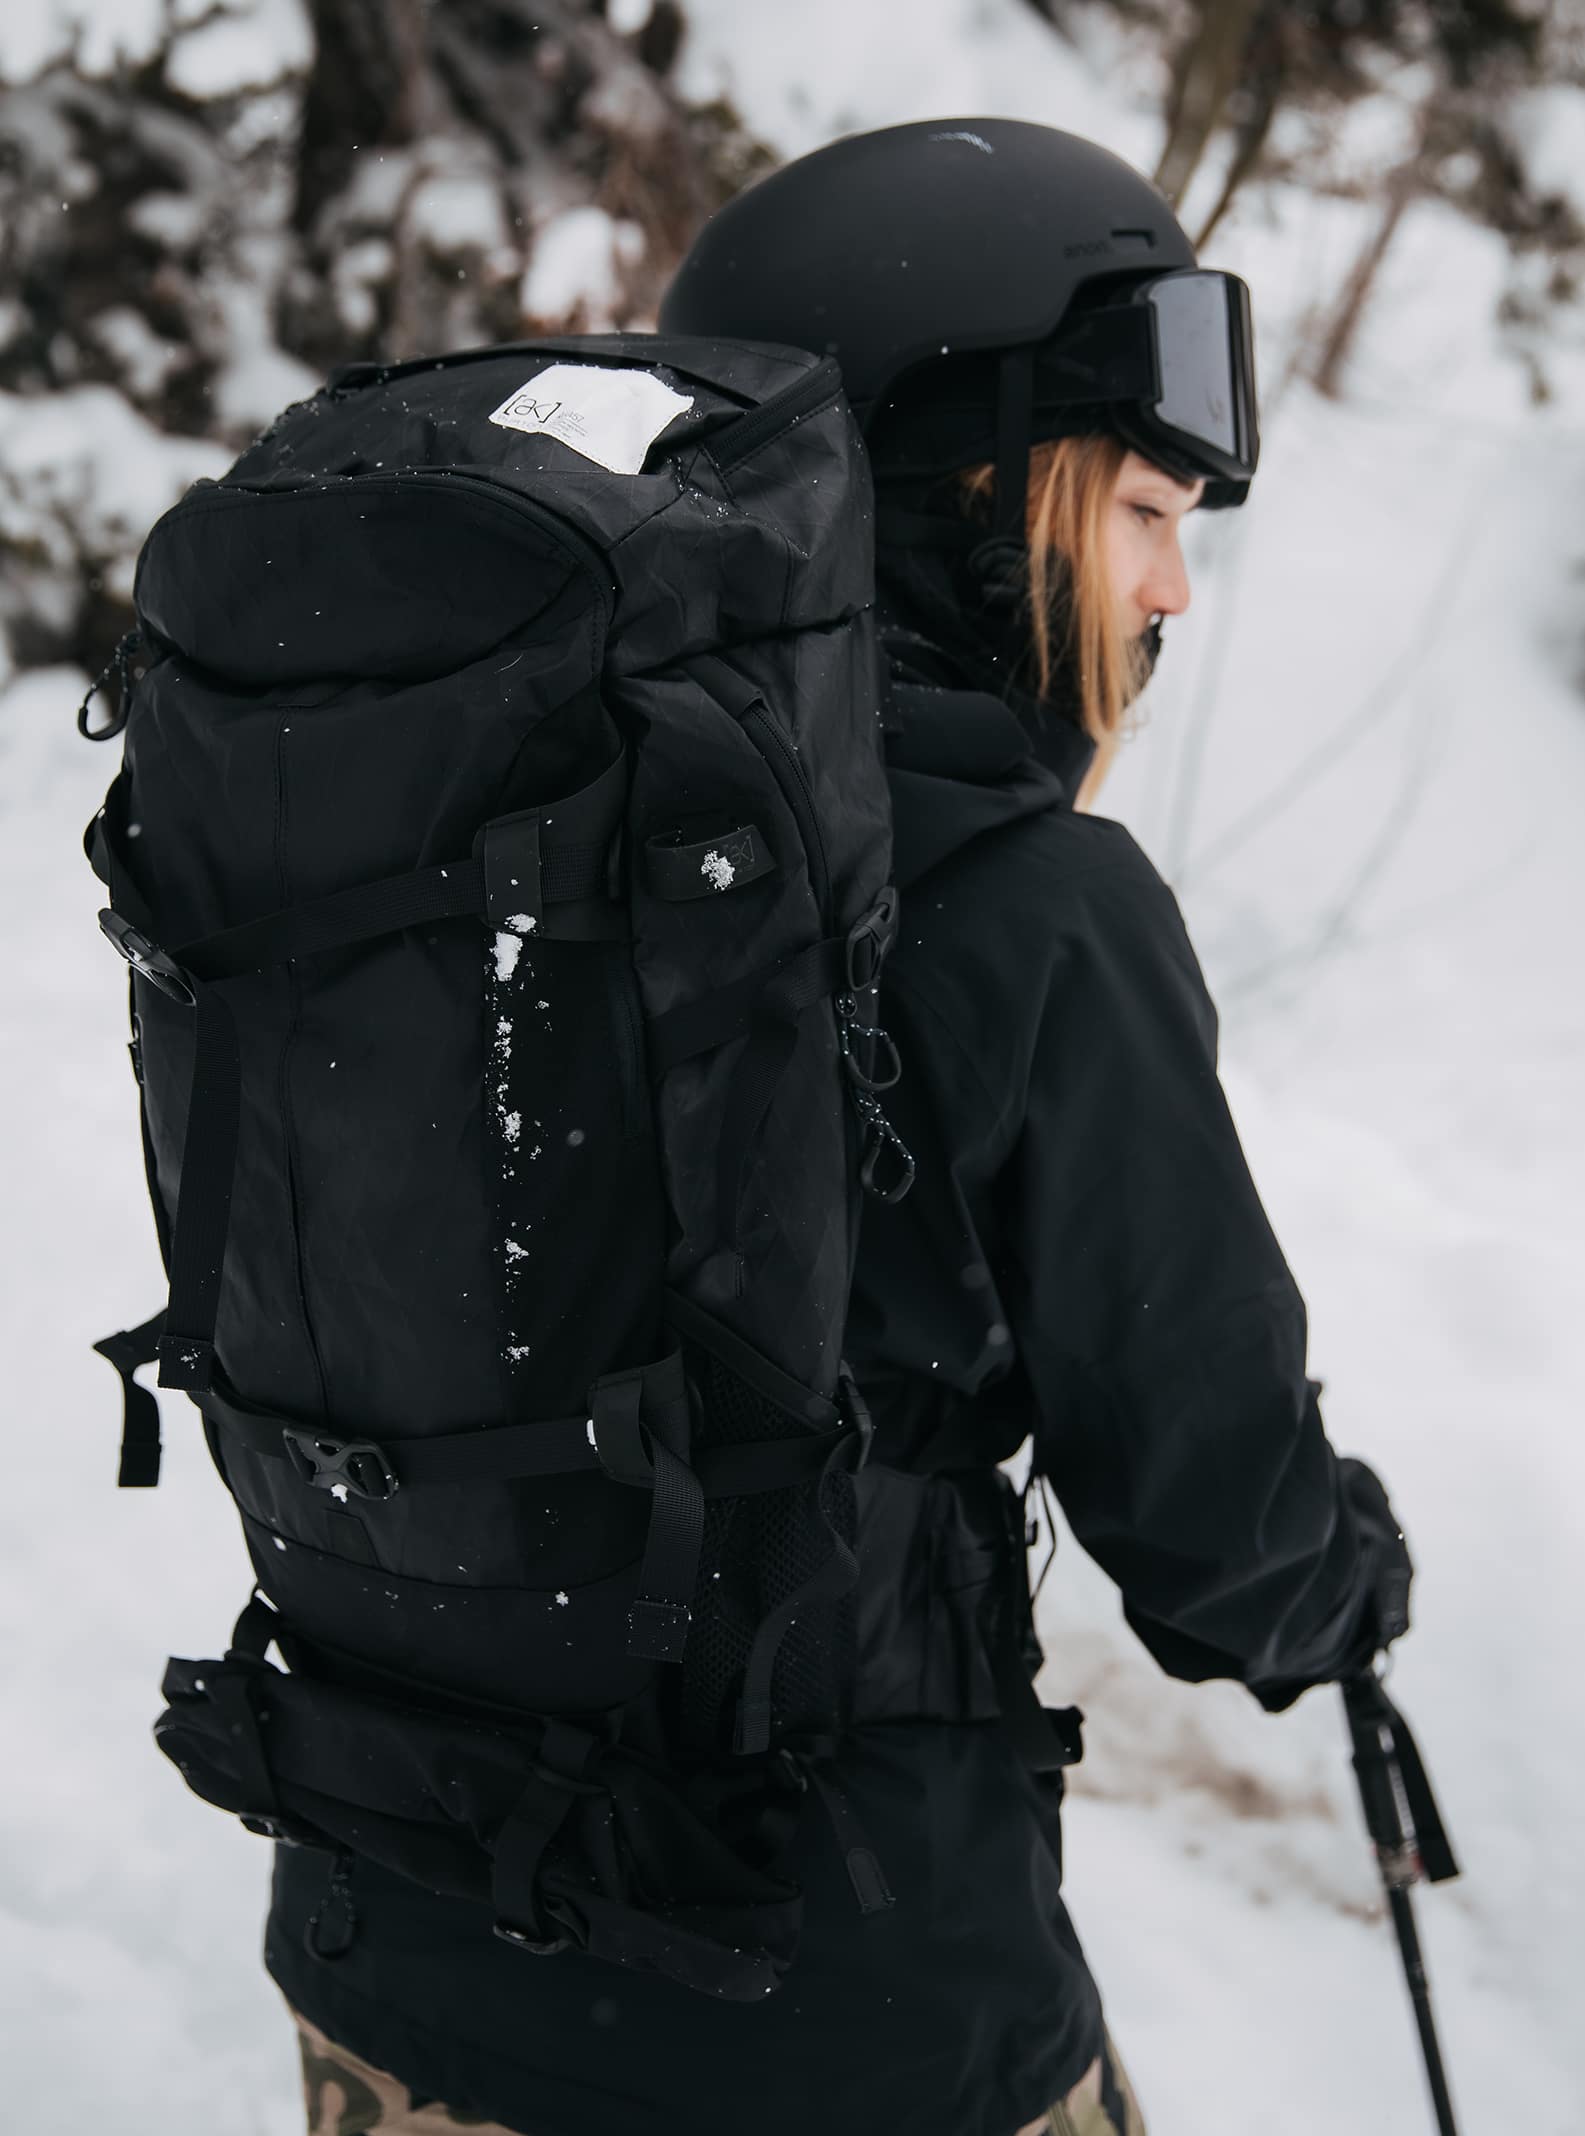 Burton [ak] Japan Guide 35L Backpack | Burton.com Winter 2022 US